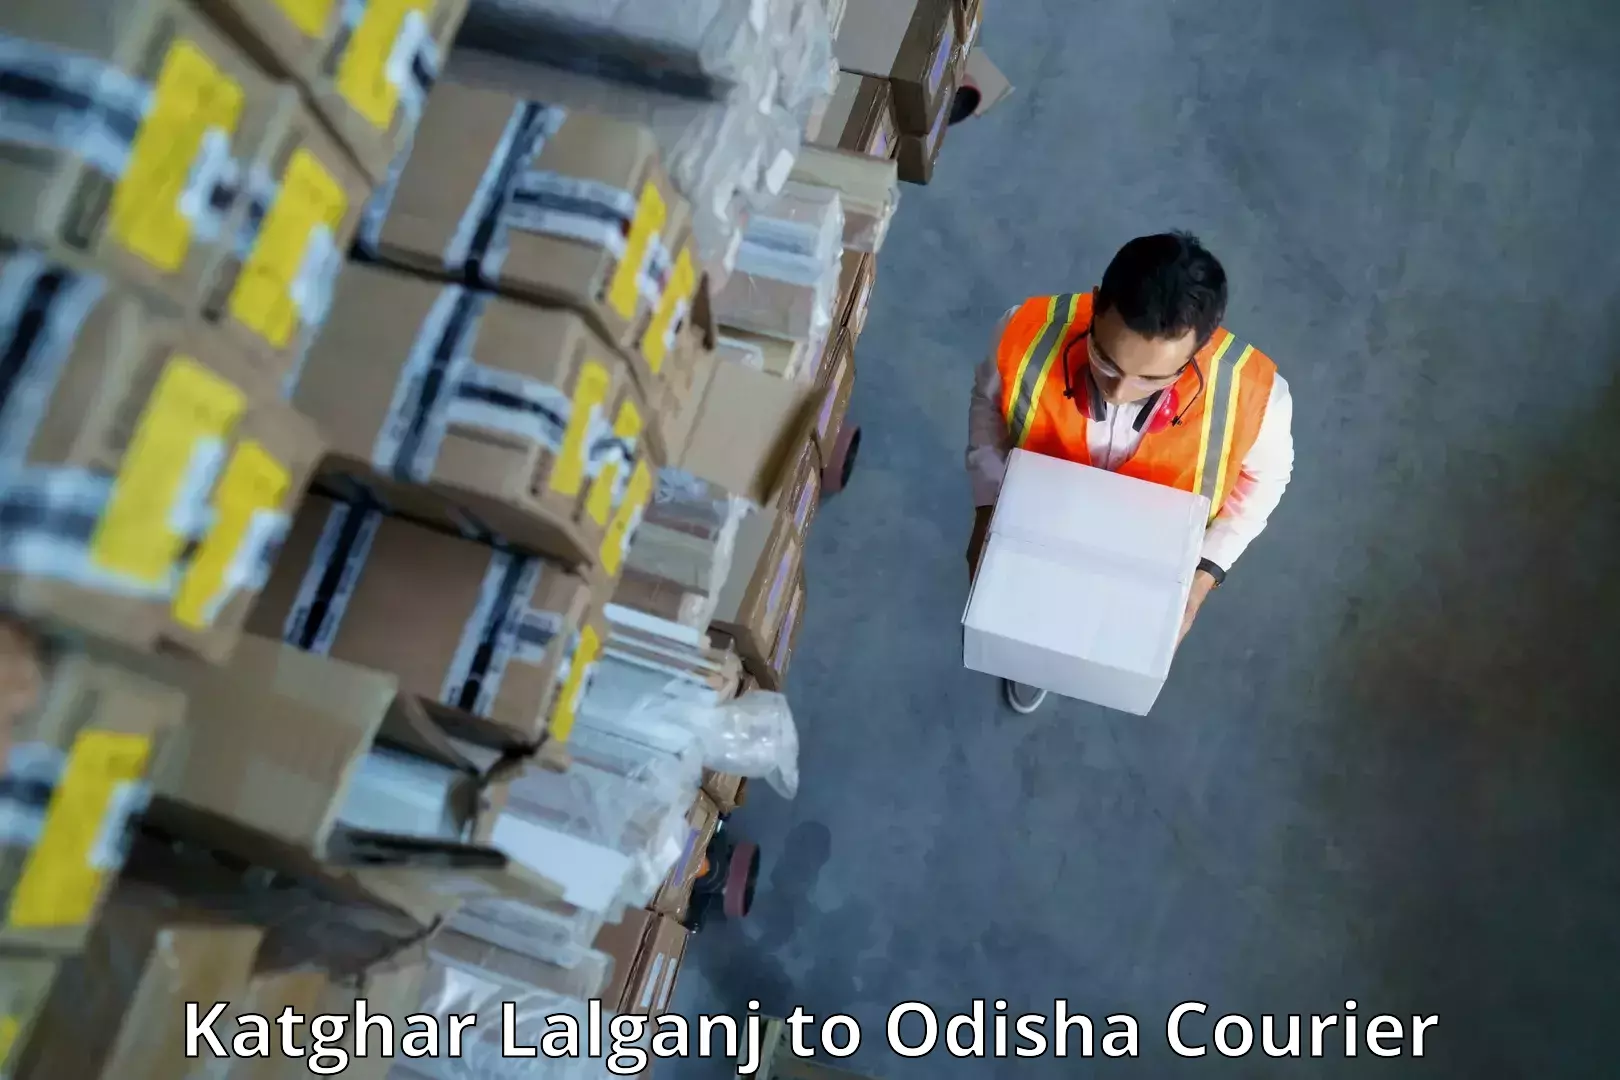 Courier service innovation Katghar Lalganj to Jagatpur